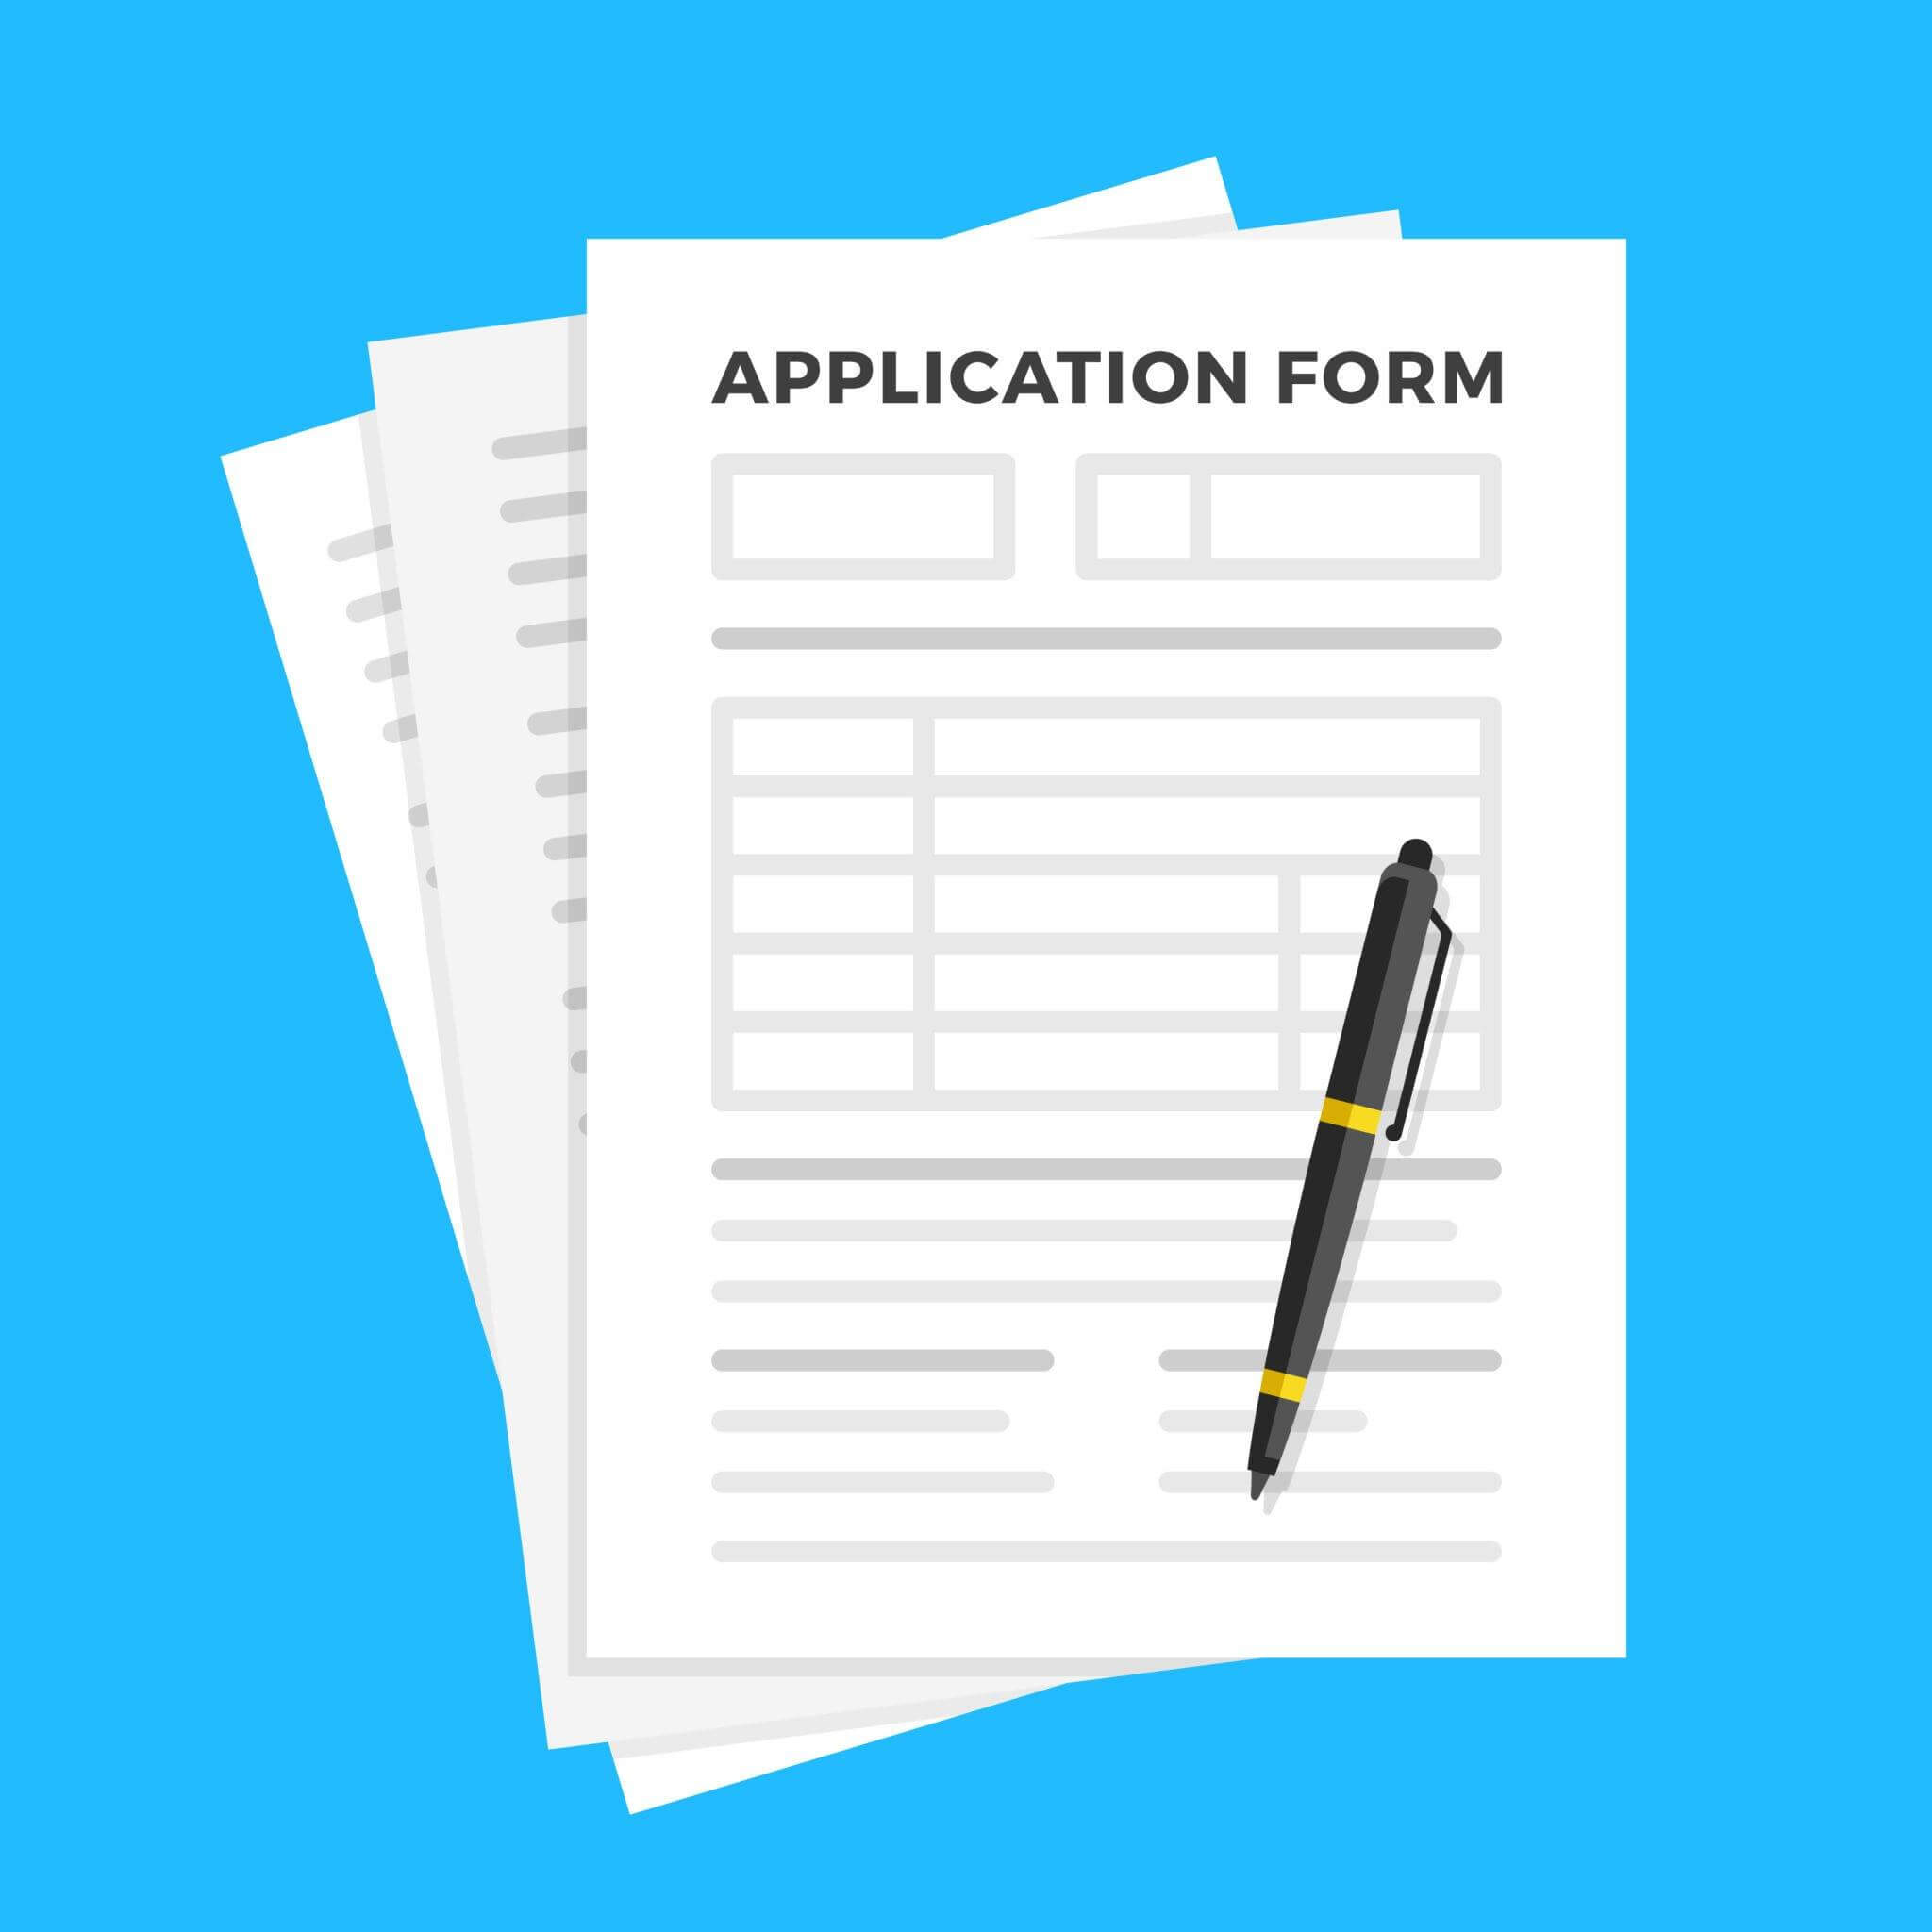 Application form Image